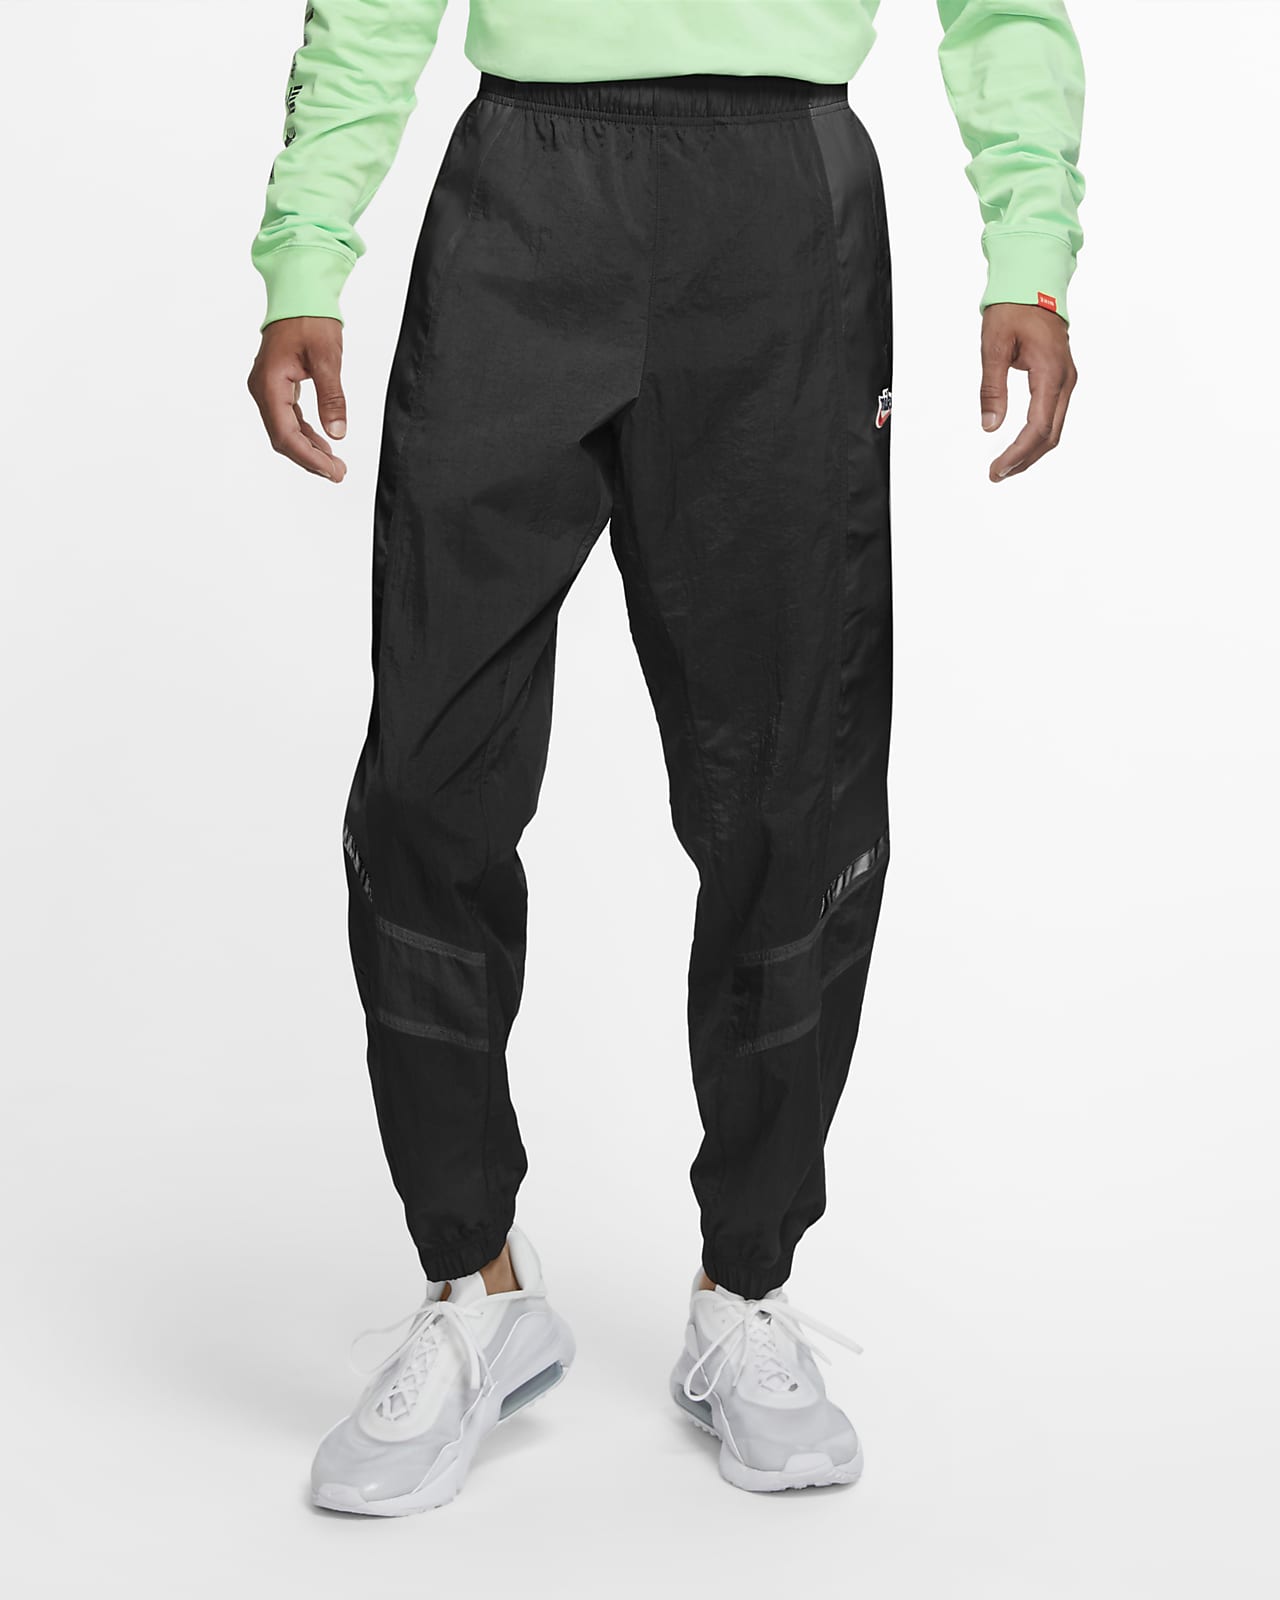 Nike Mens Stretch Woven DriFit Training Pants Black Color Windpants L   Amazonin Sports Fitness  Outdoors